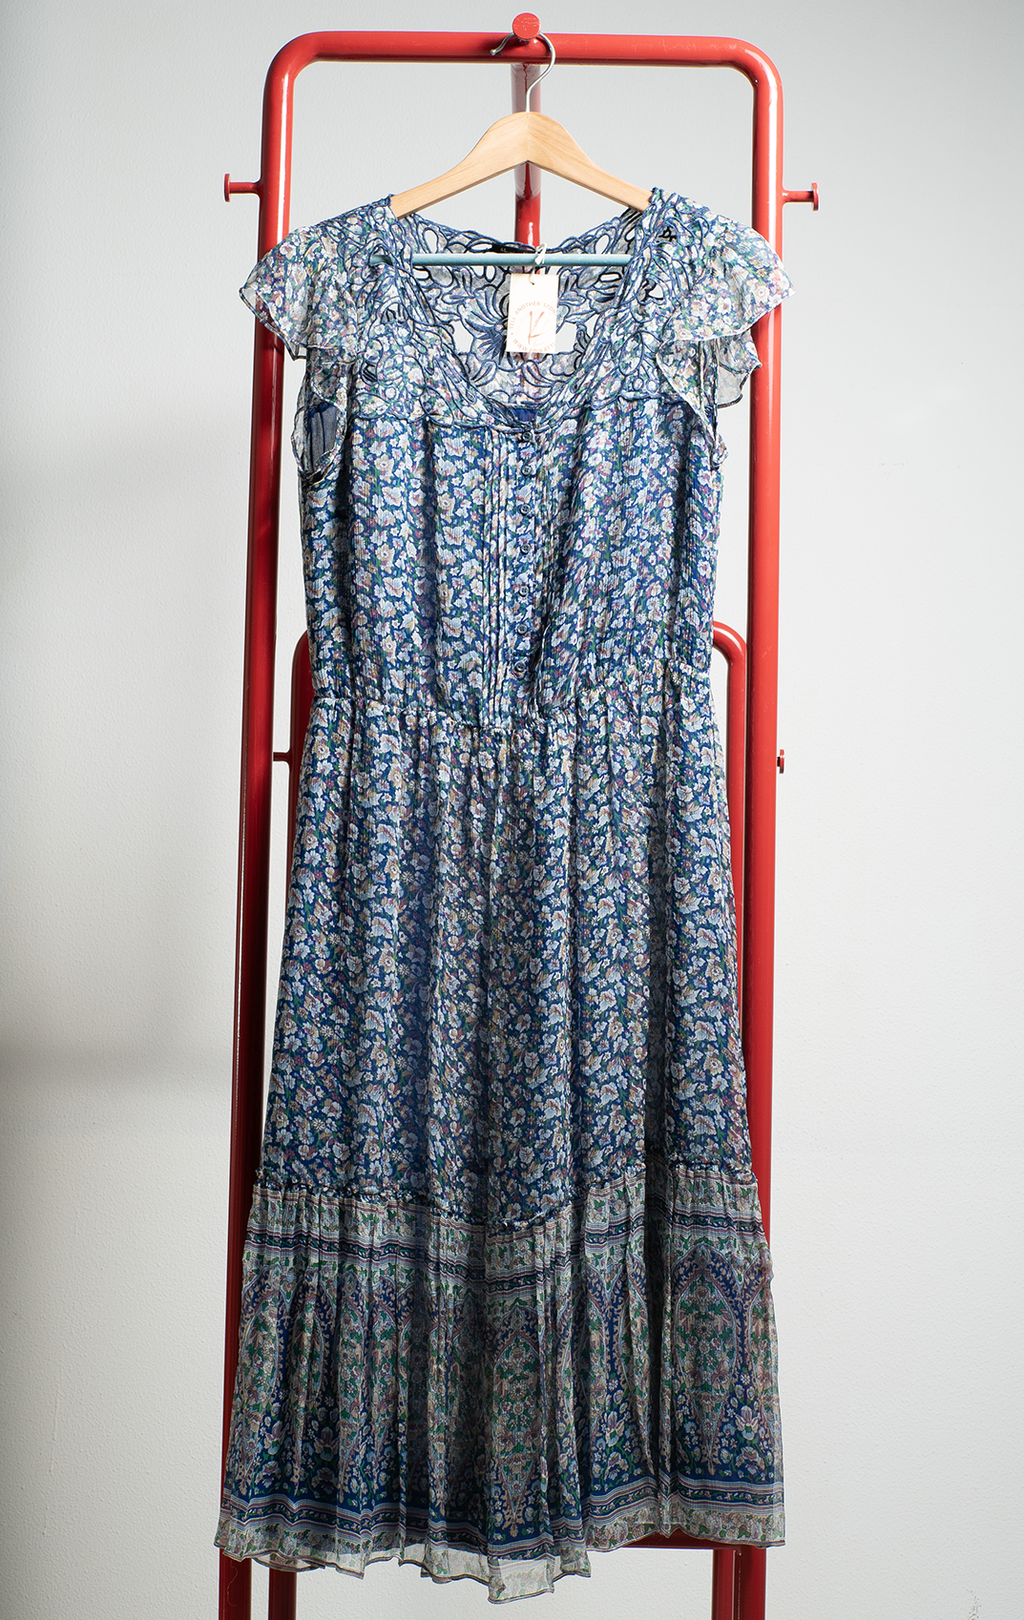 MASSIMO DUTTI DRESS - Blue floral - Medium